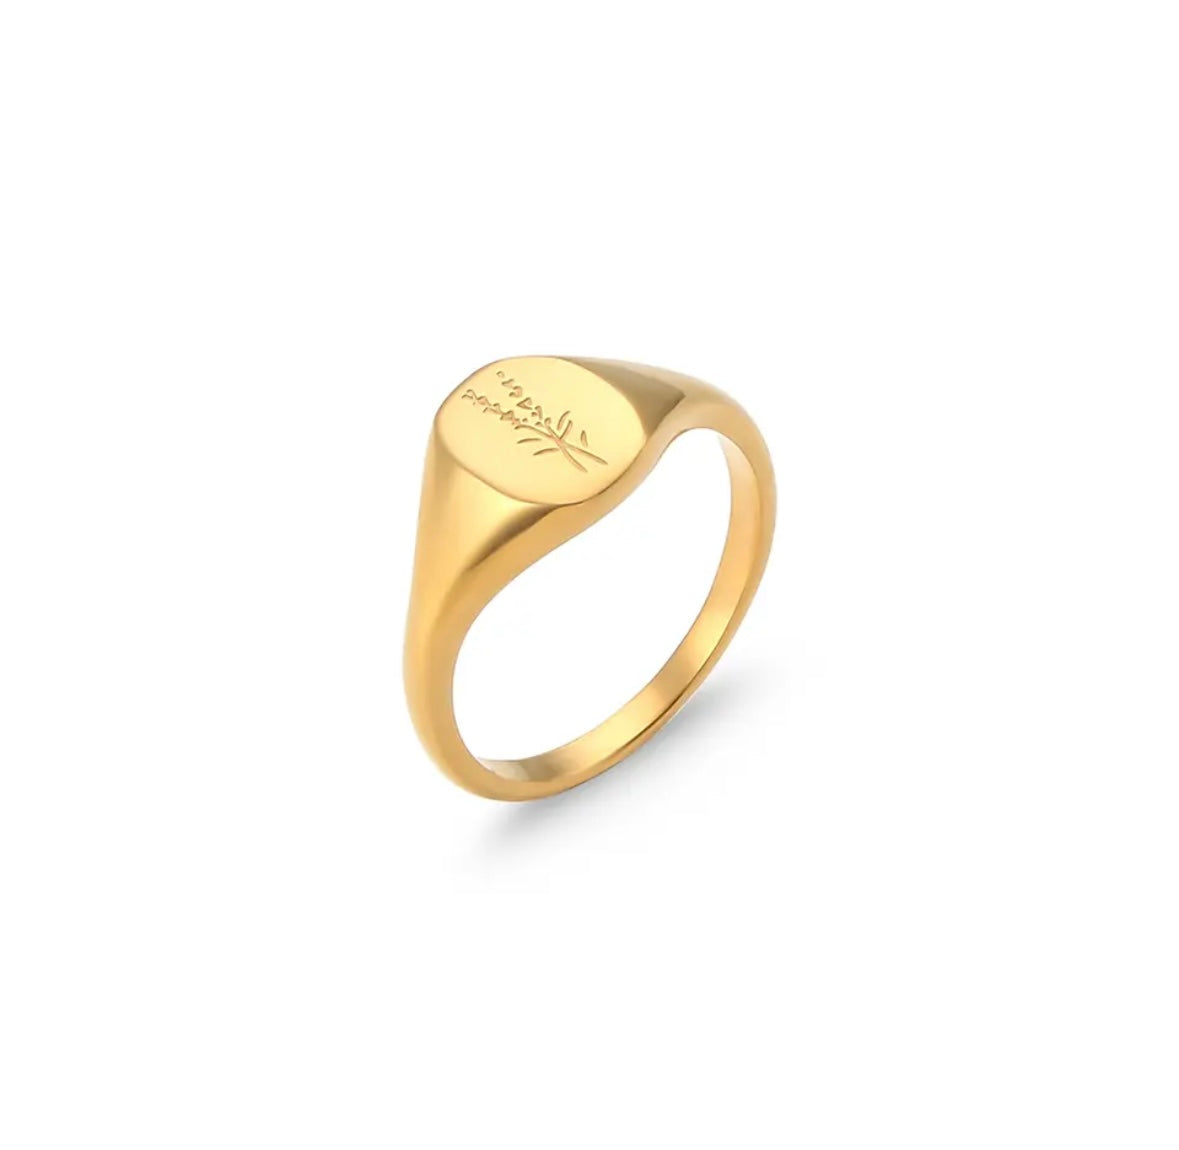 “Wildflower” engraved ring